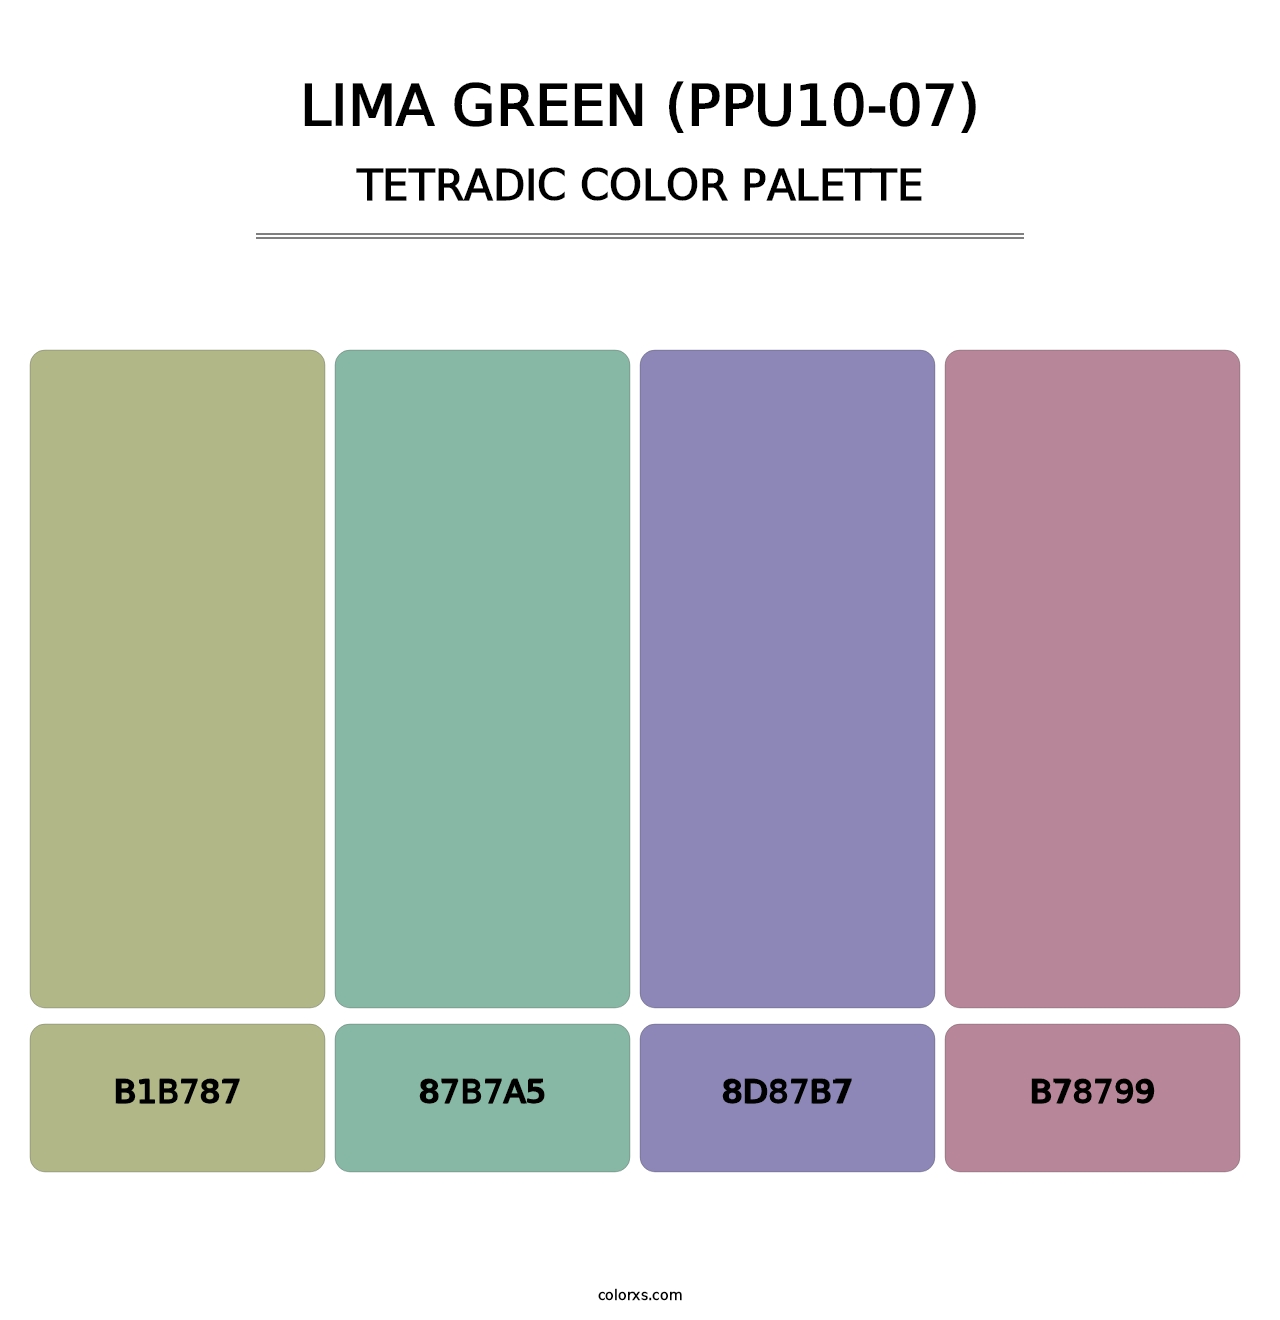 Lima Green (PPU10-07) - Tetradic Color Palette